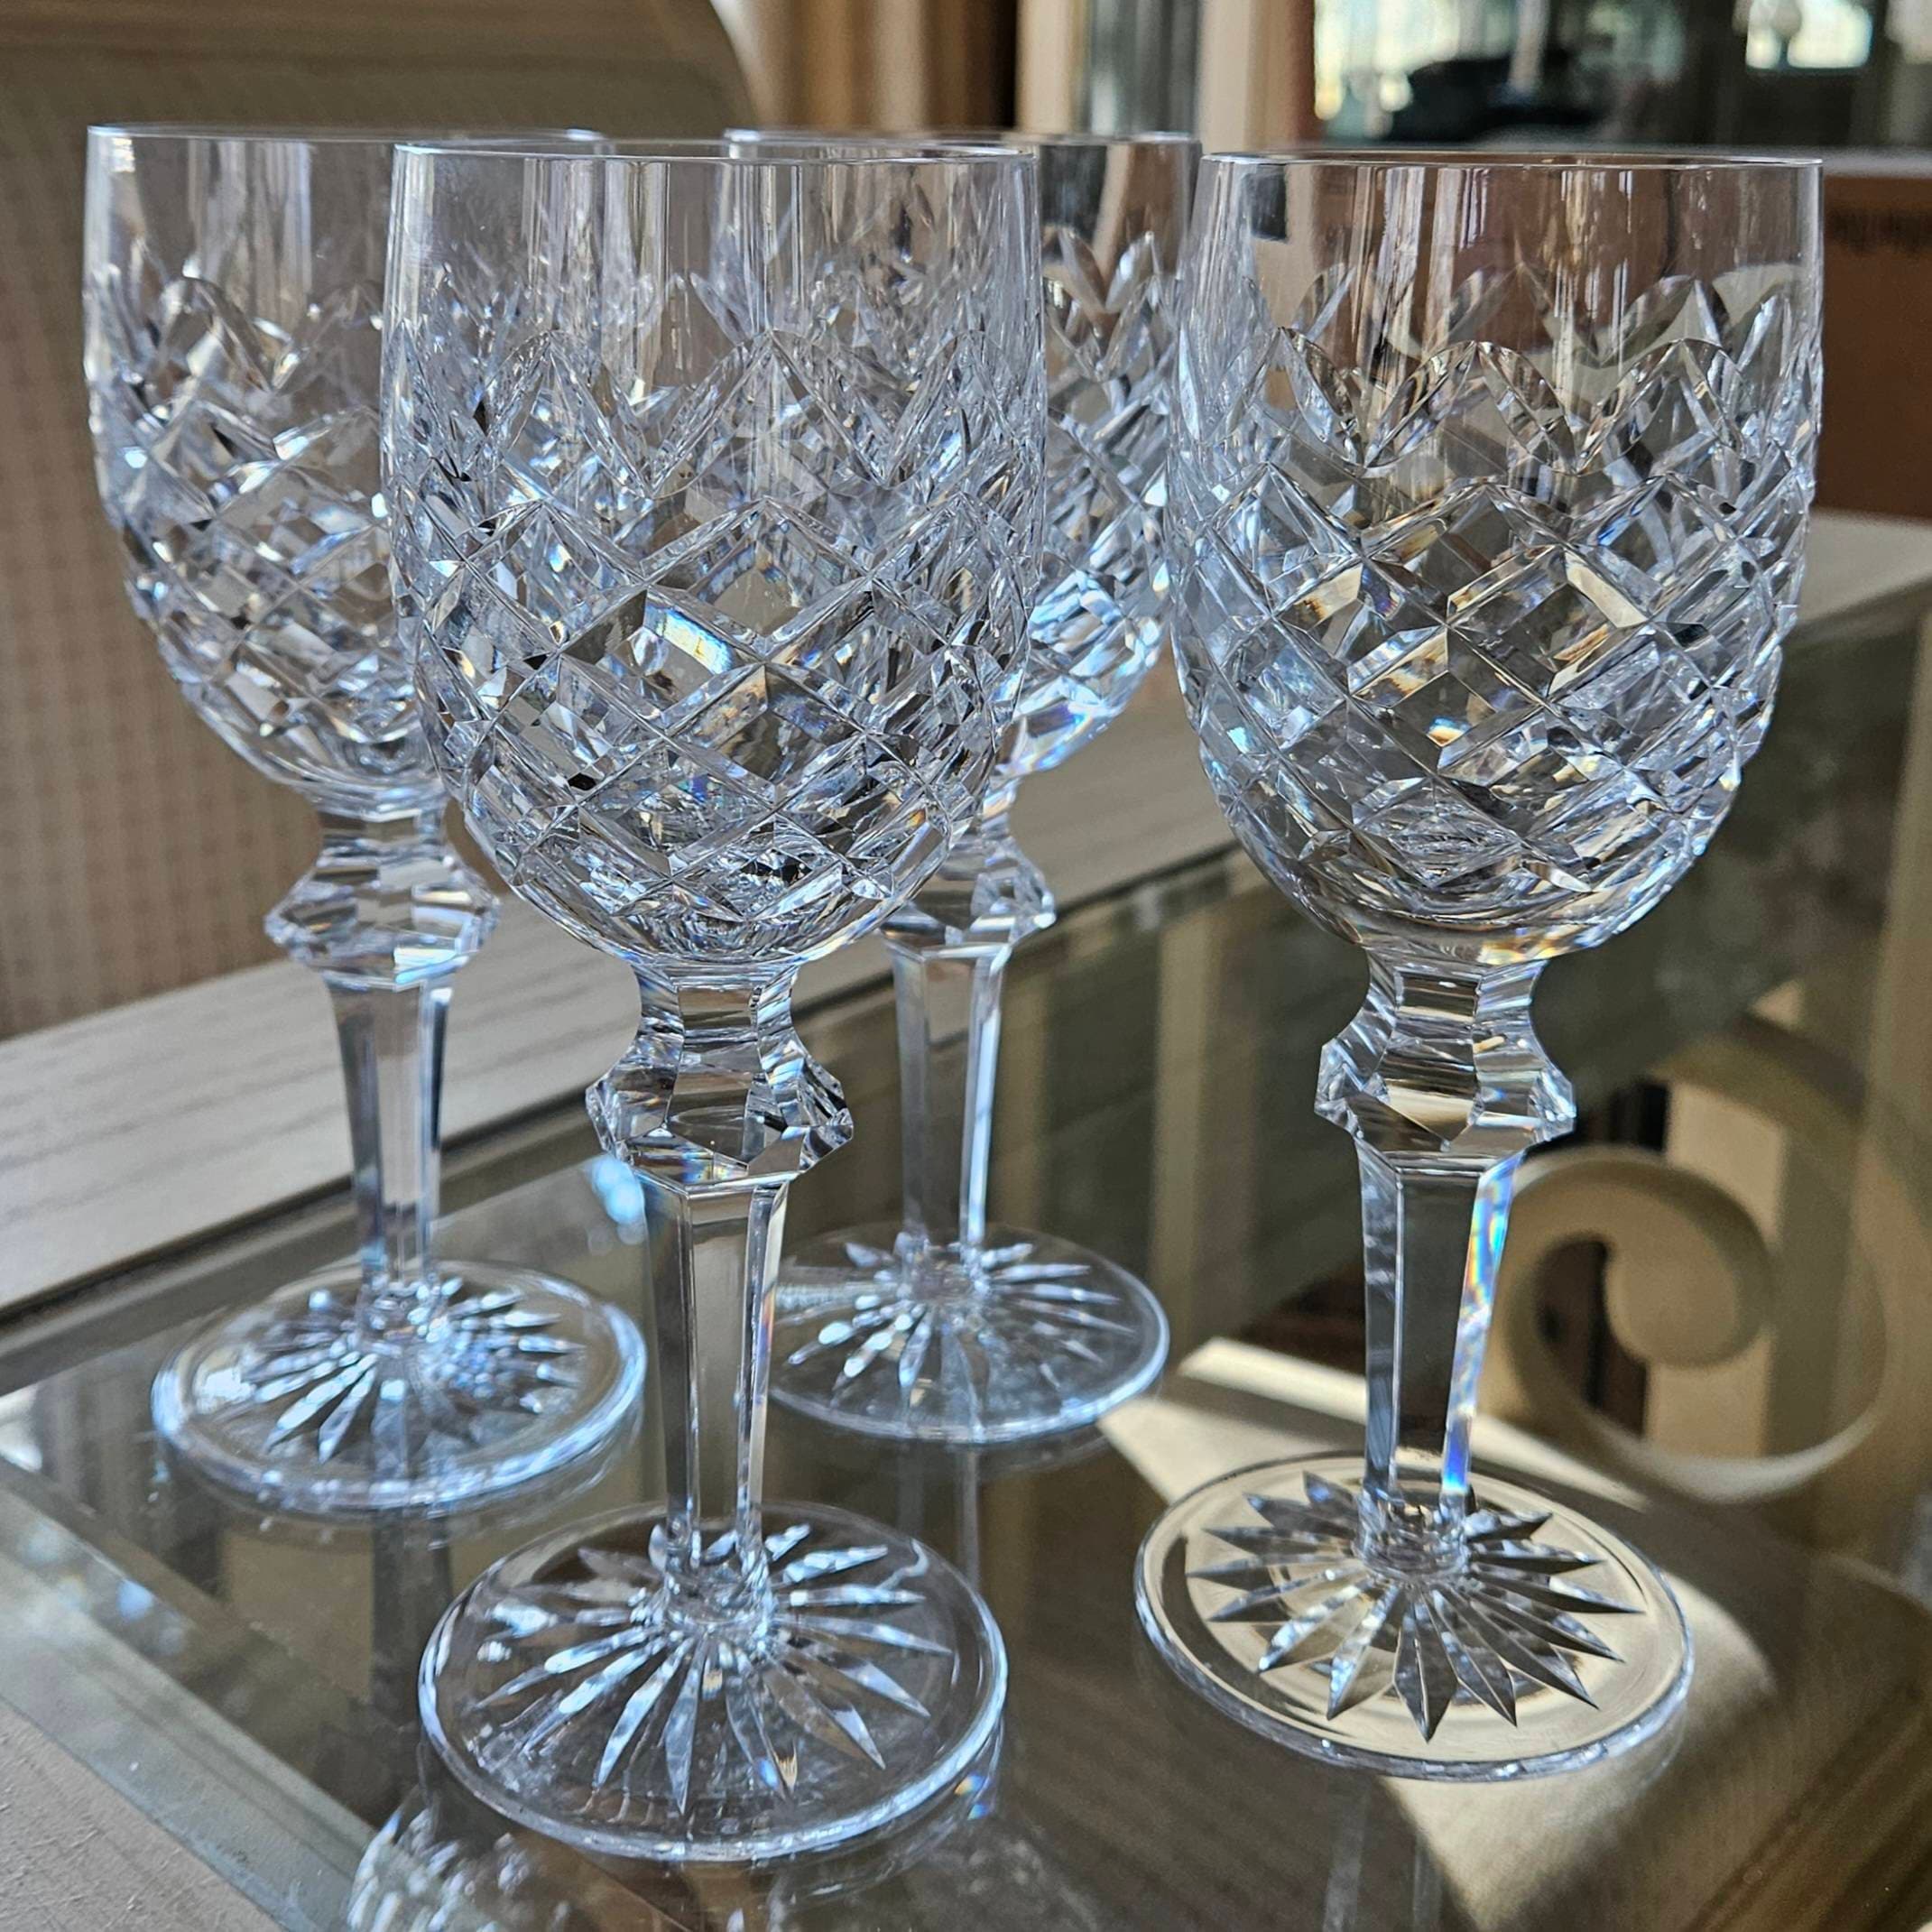 Quadrat Romanian Crystal Water Glasses, Set of 4 - Drinkware